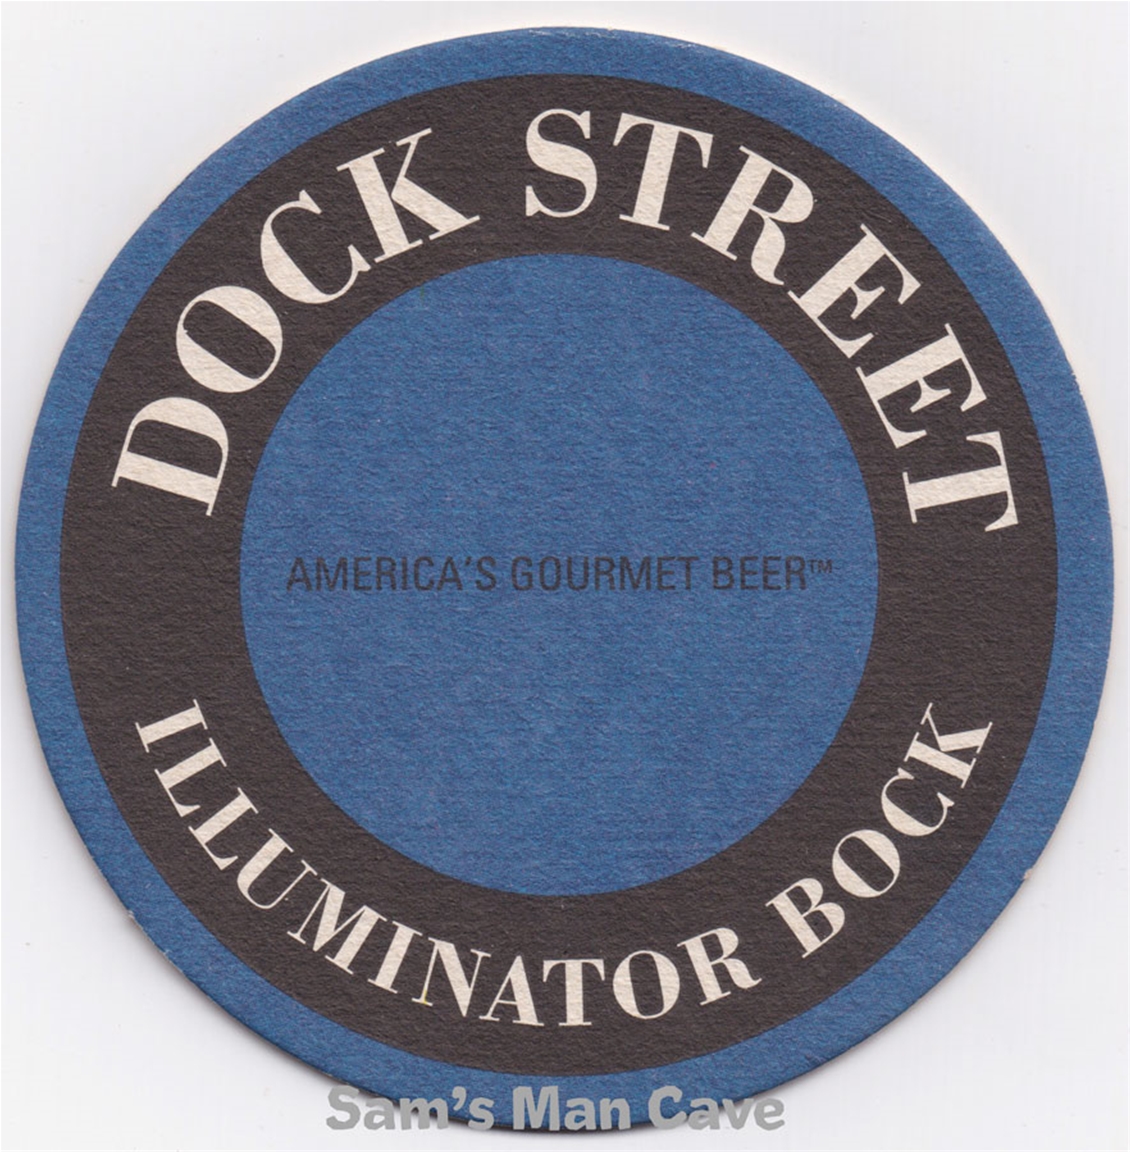 Dock Street Illuminator Bock Coaster